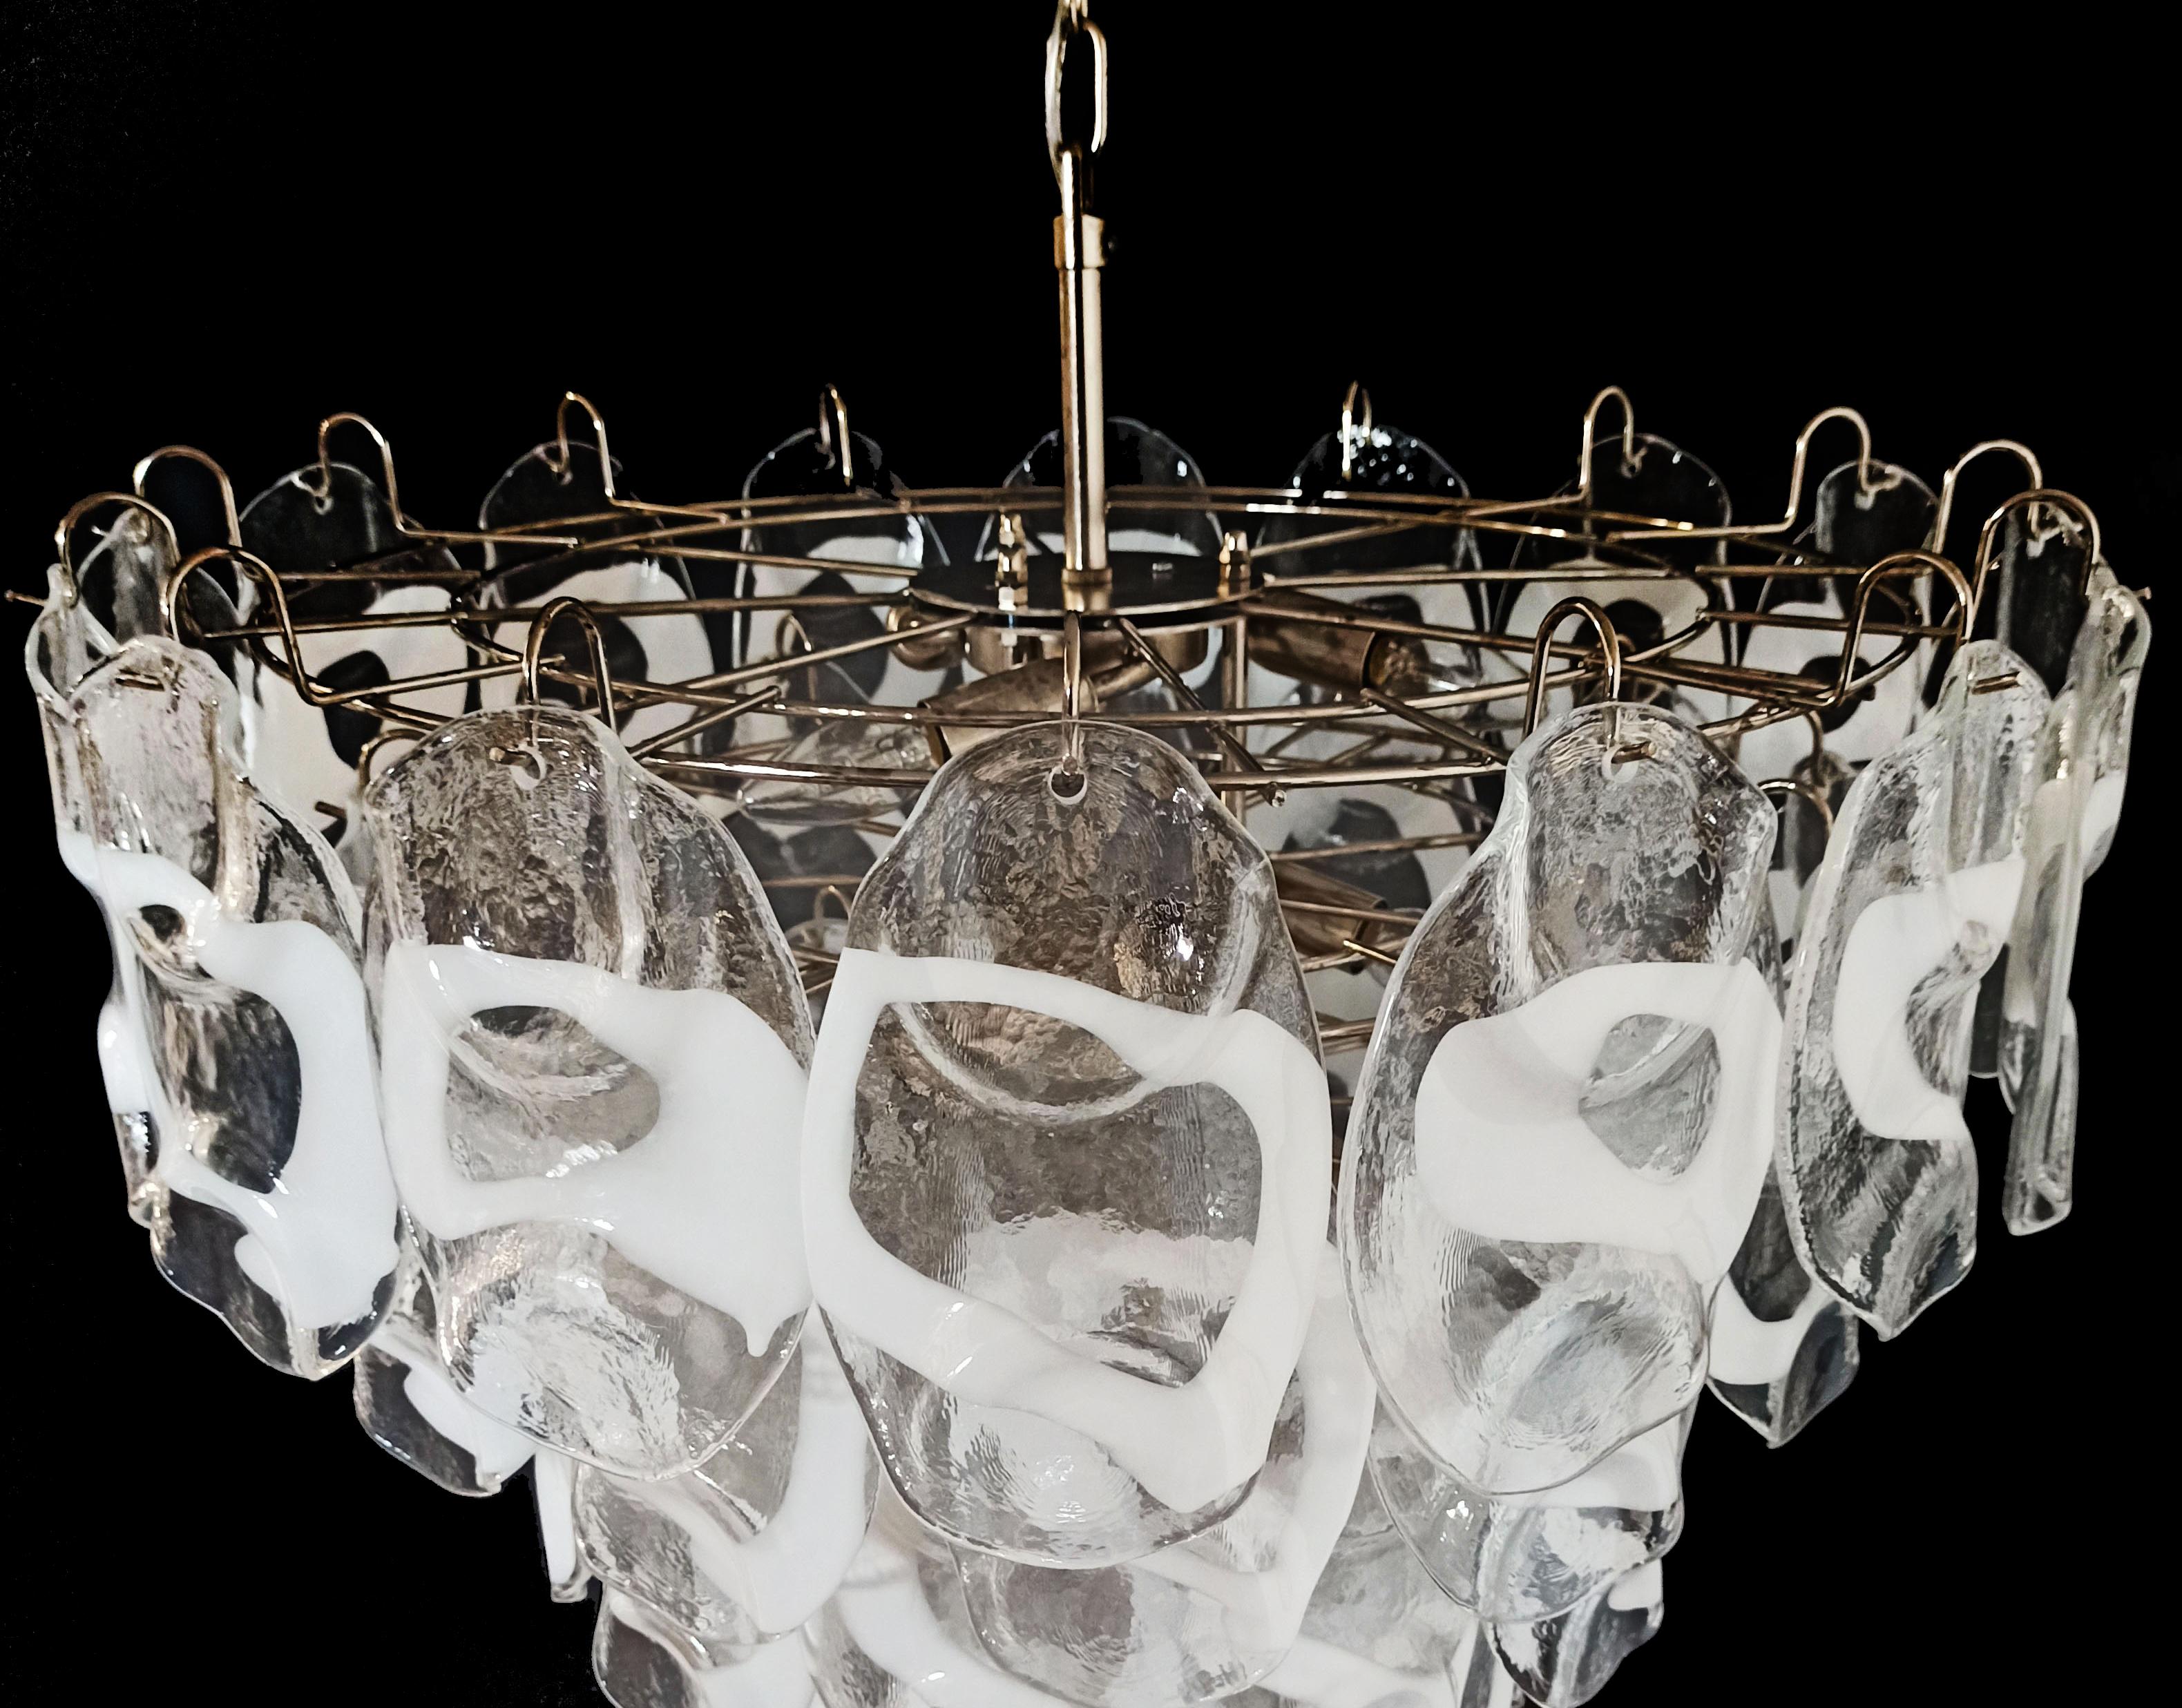 Art Glass Amazing Huge Vintage Italian Murano chandelier lamp by Vistosi - 57 glasses For Sale